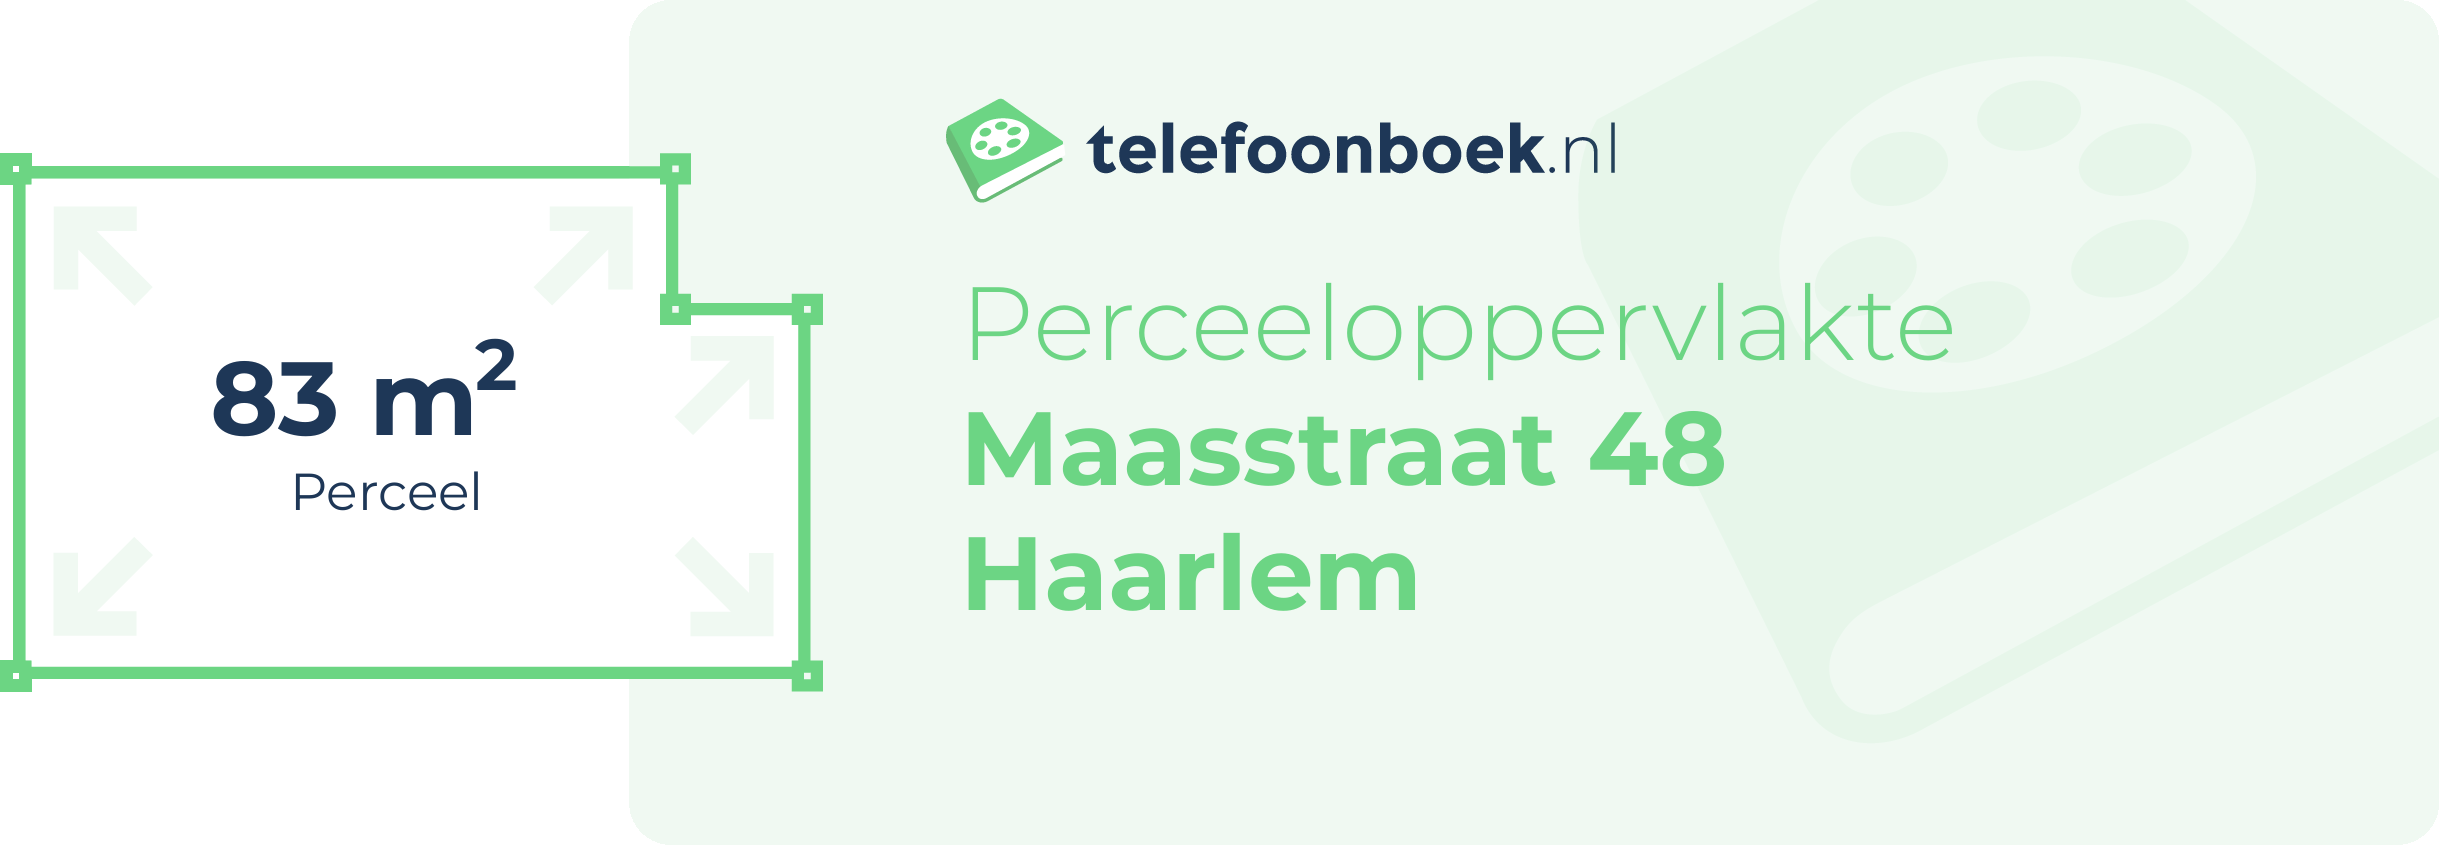 Perceeloppervlakte Maasstraat 48 Haarlem